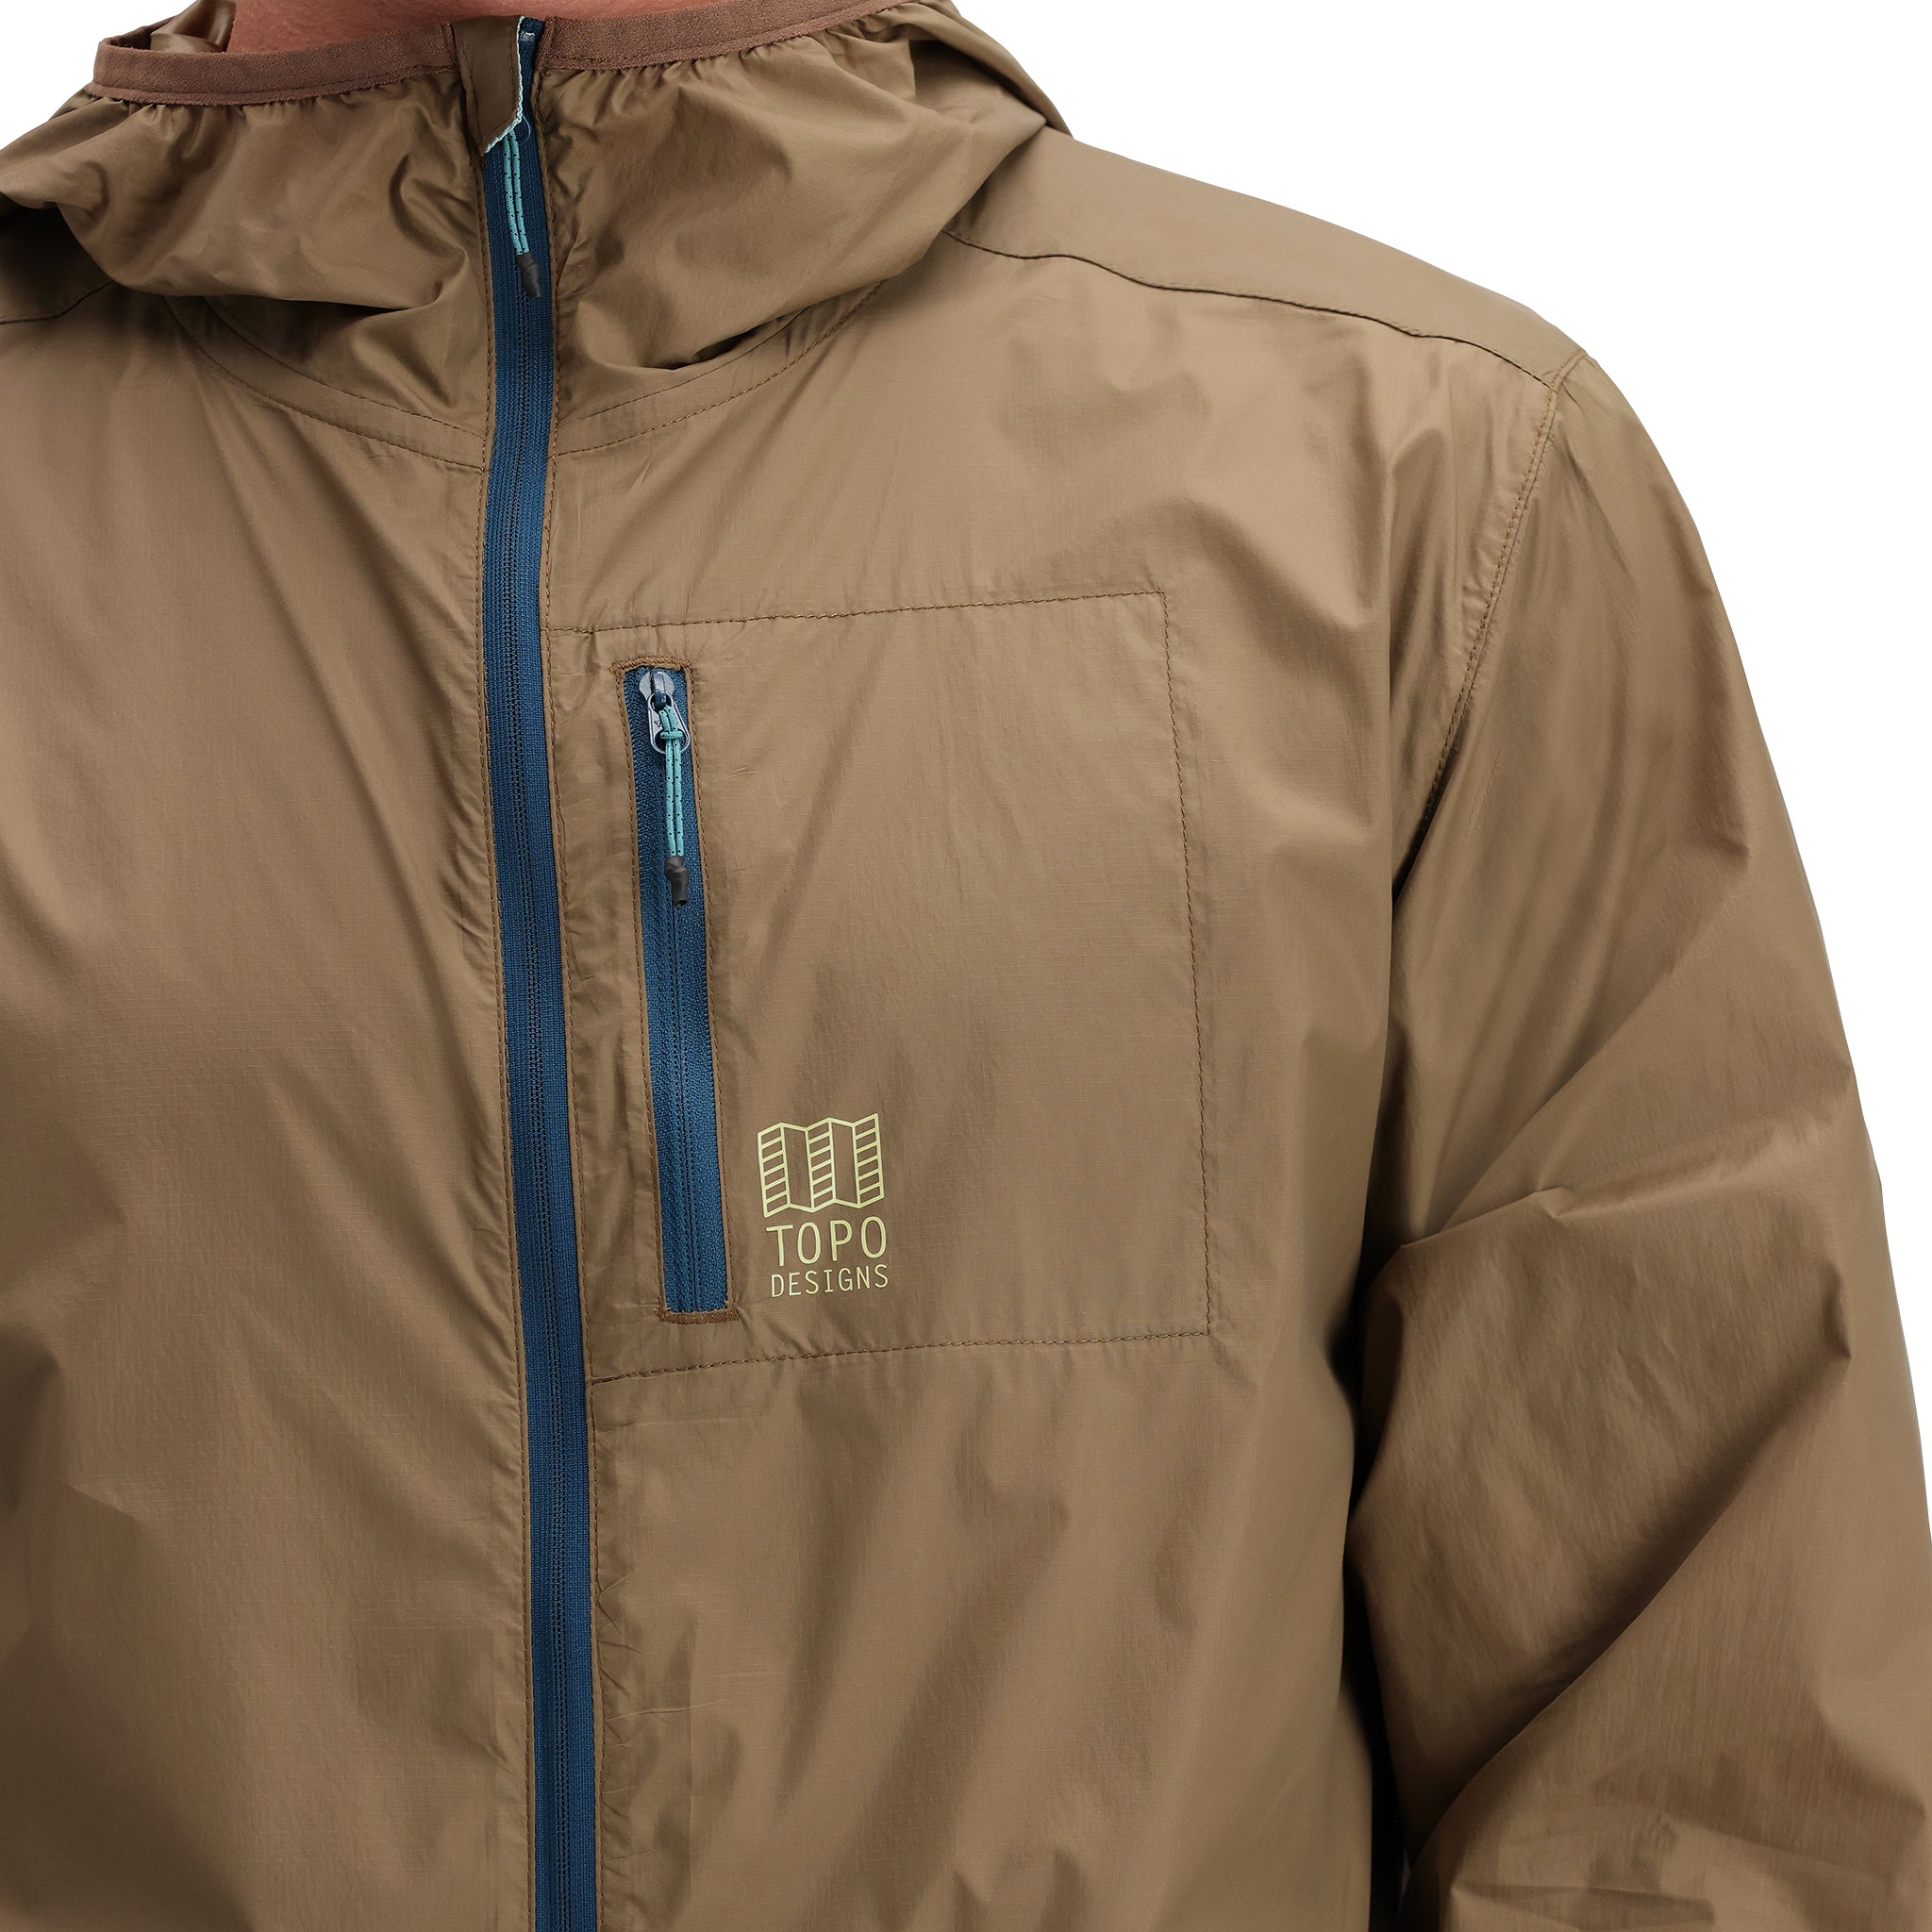 Detail shot of Topo Designs Global Ultralight Packable Jacket - Men's in "Desert Palm"